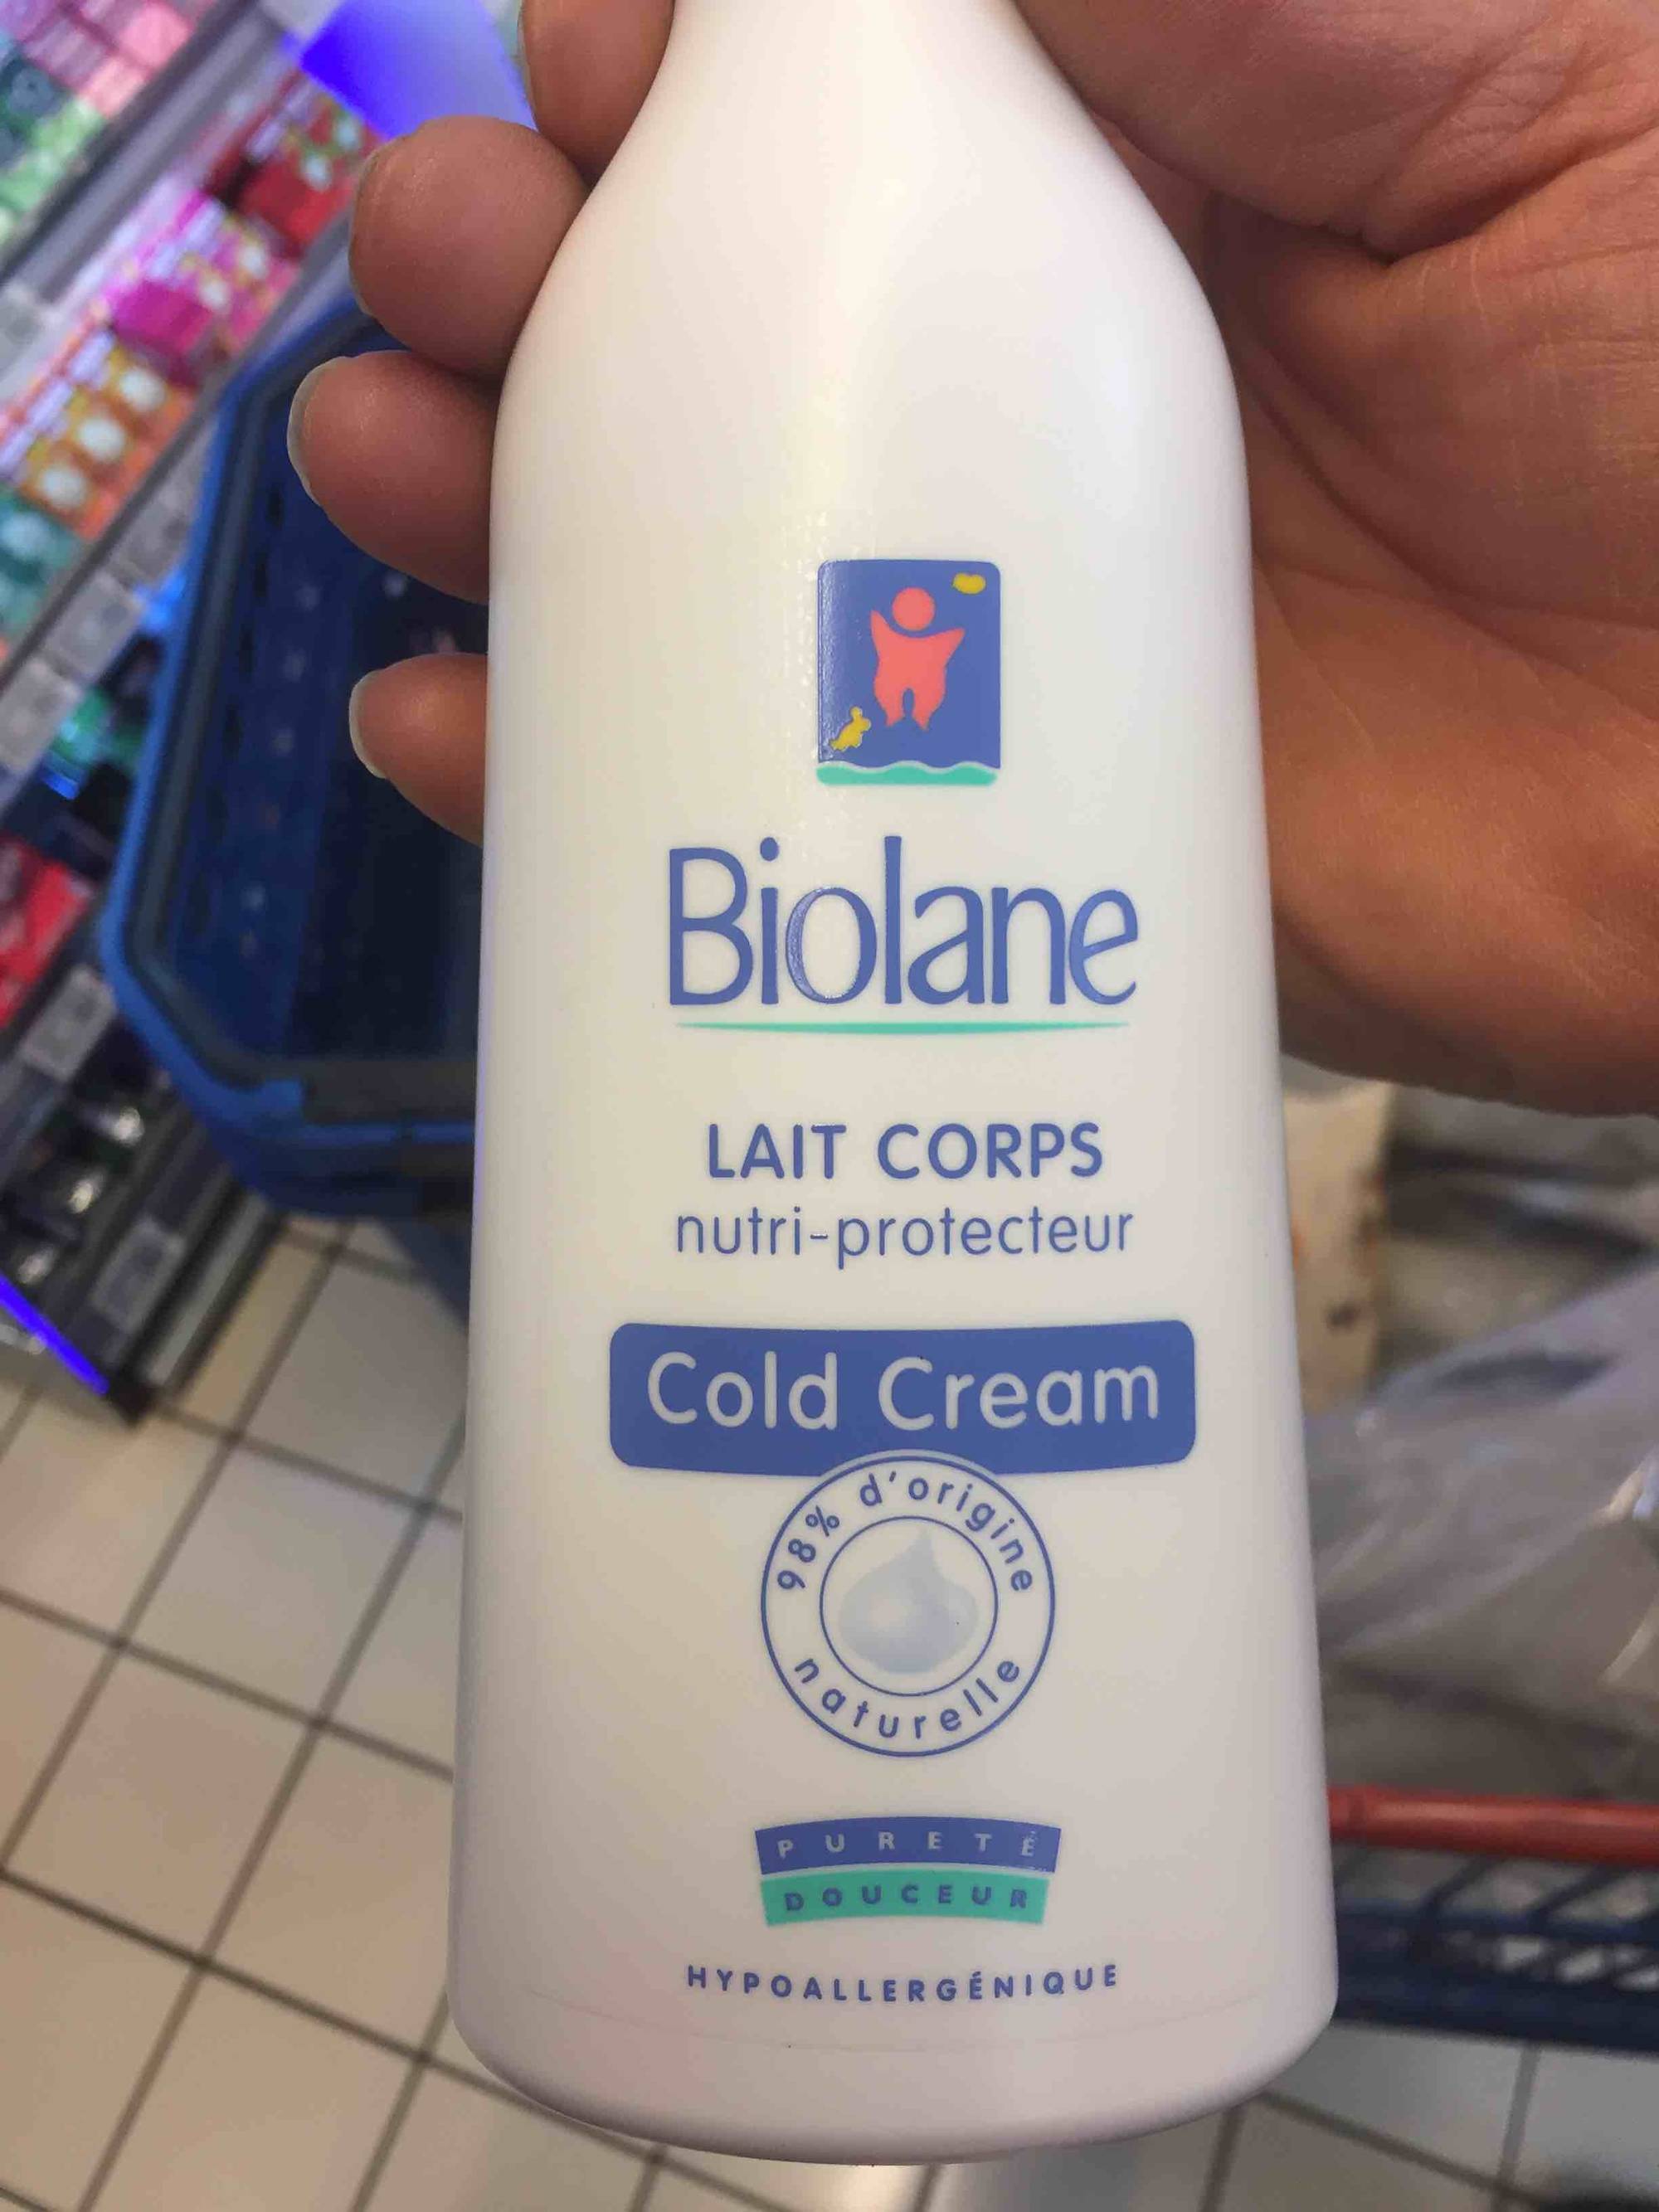 BIOLANE - Cold cream - Lait corps nutri-protecteur 